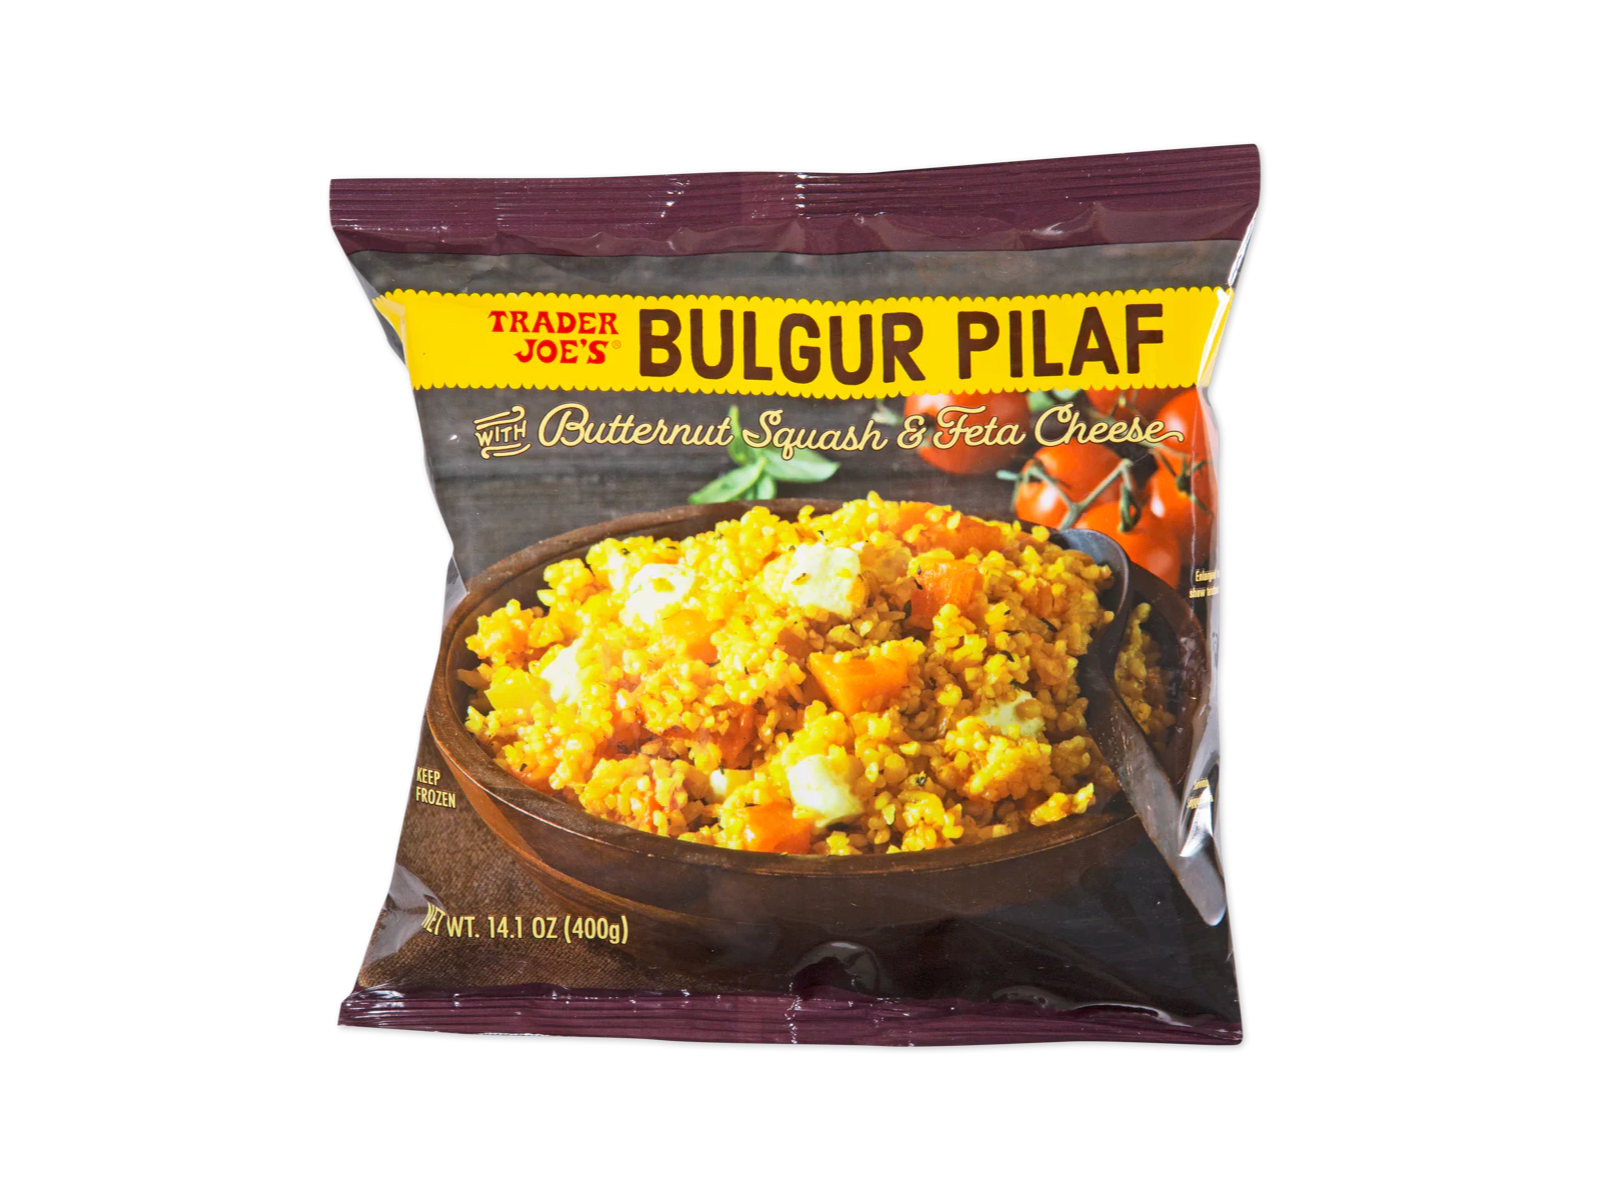 Bulgur Pilaf with Butternut Squash and Feta Cheese